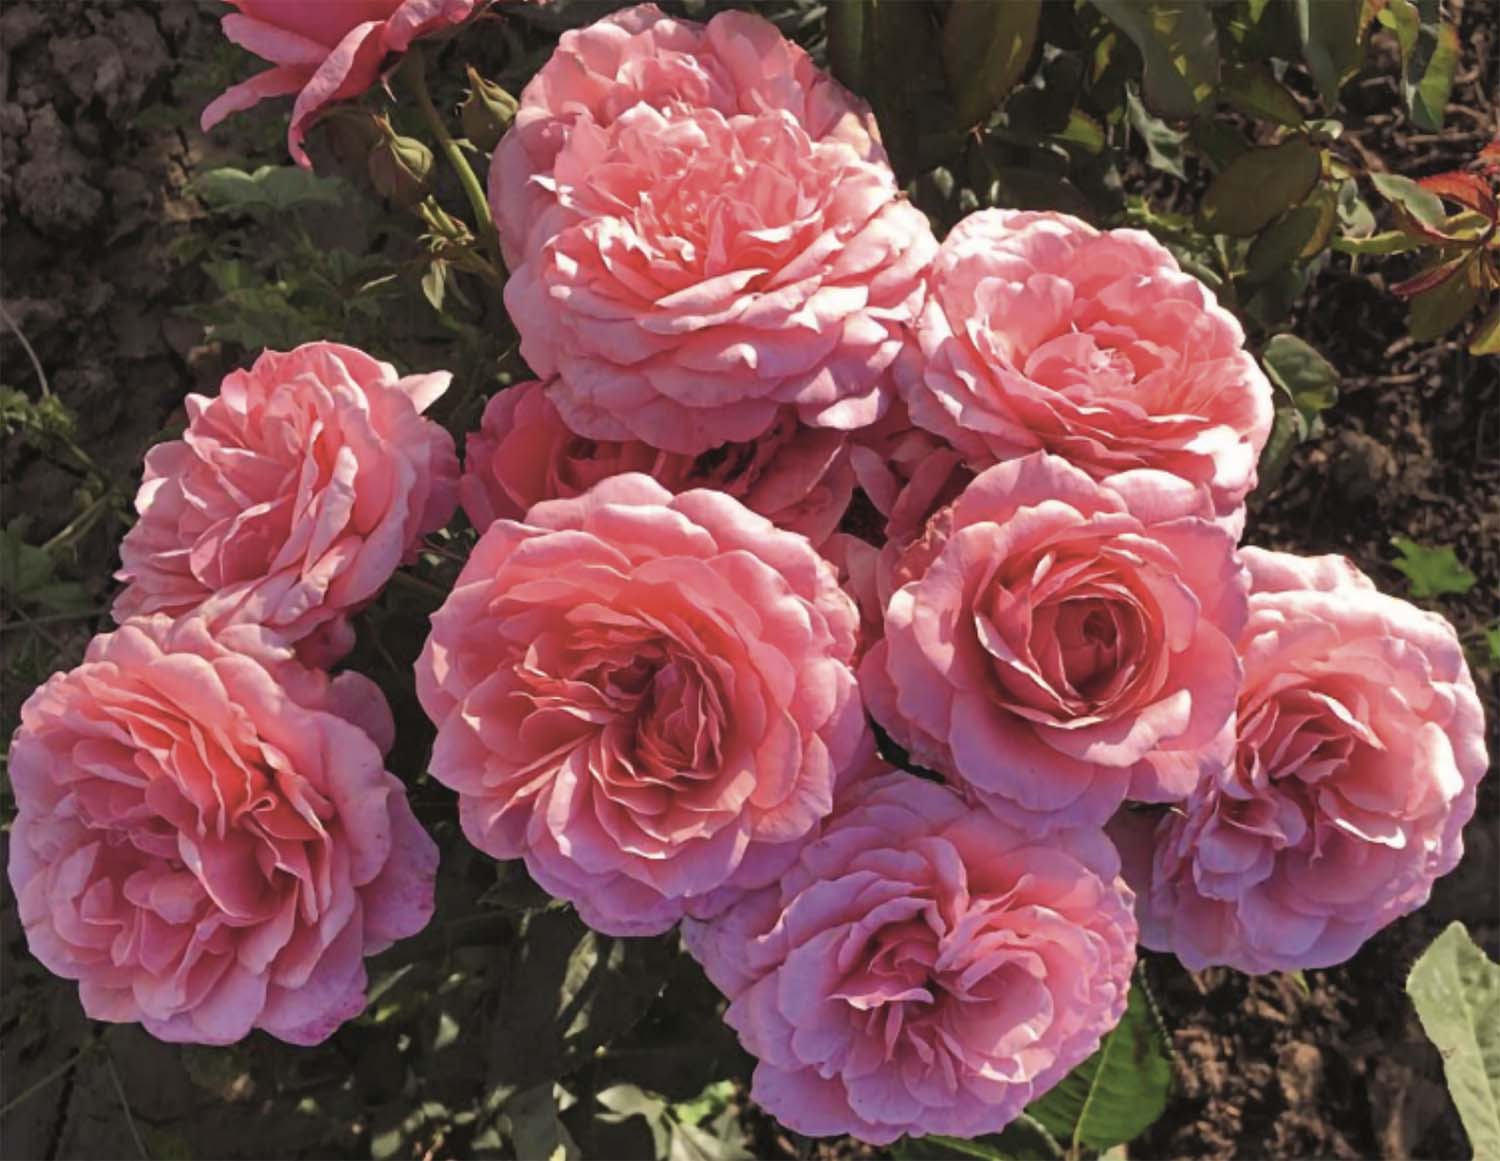 Uptown Girl Rose: A Gardeners' Delight